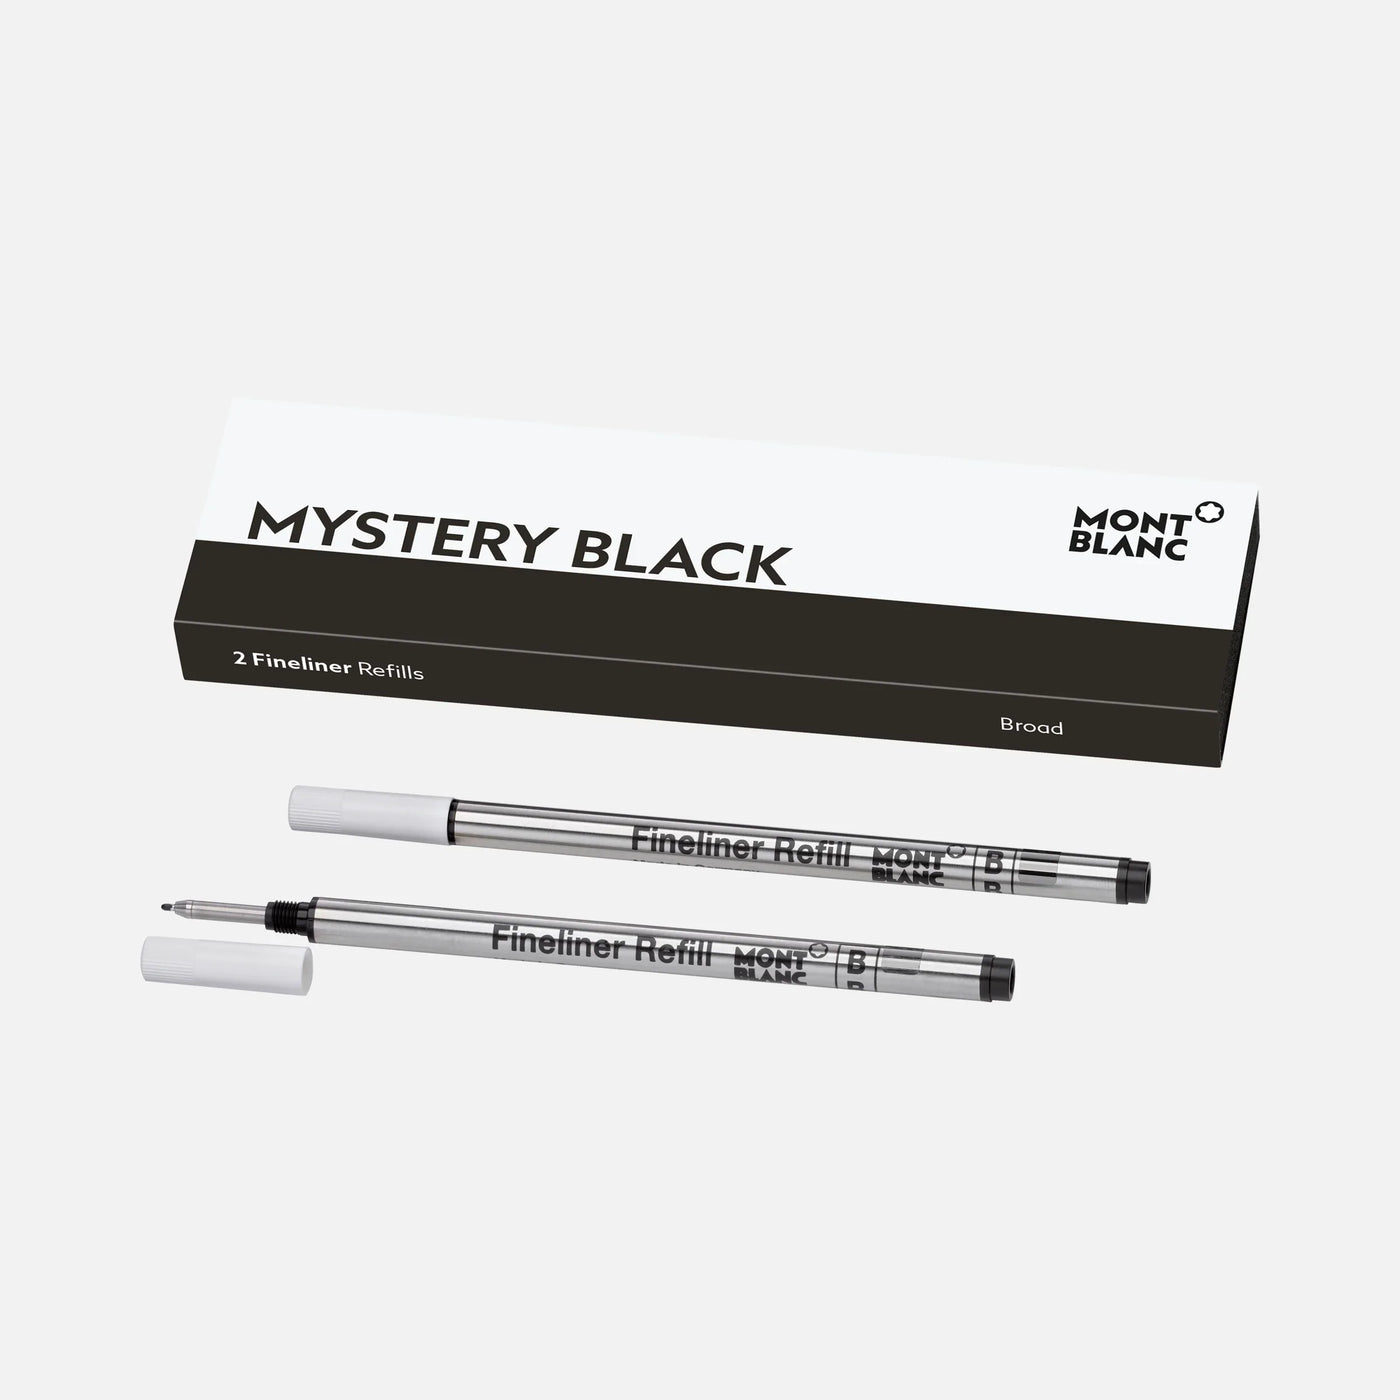 Montblanc Mystery Black 2 Fineliner Refills - Broad